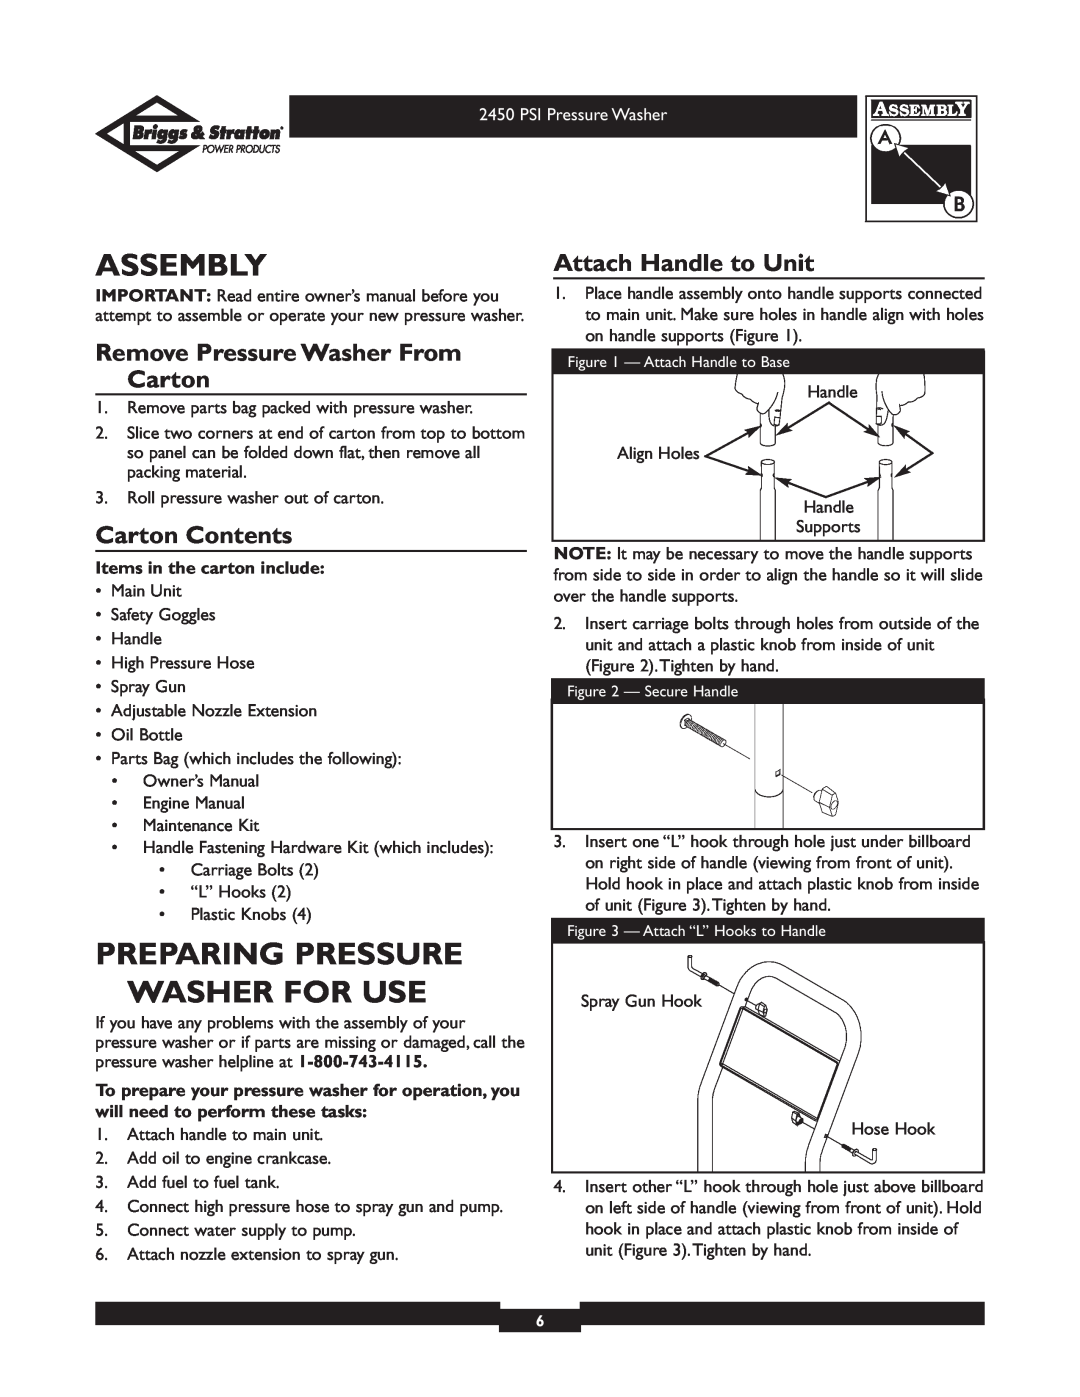 Briggs & Stratton 020219 Assembly, Preparing Pressure Washer For Use, Remove Pressure Washer From Carton, Carton Contents 